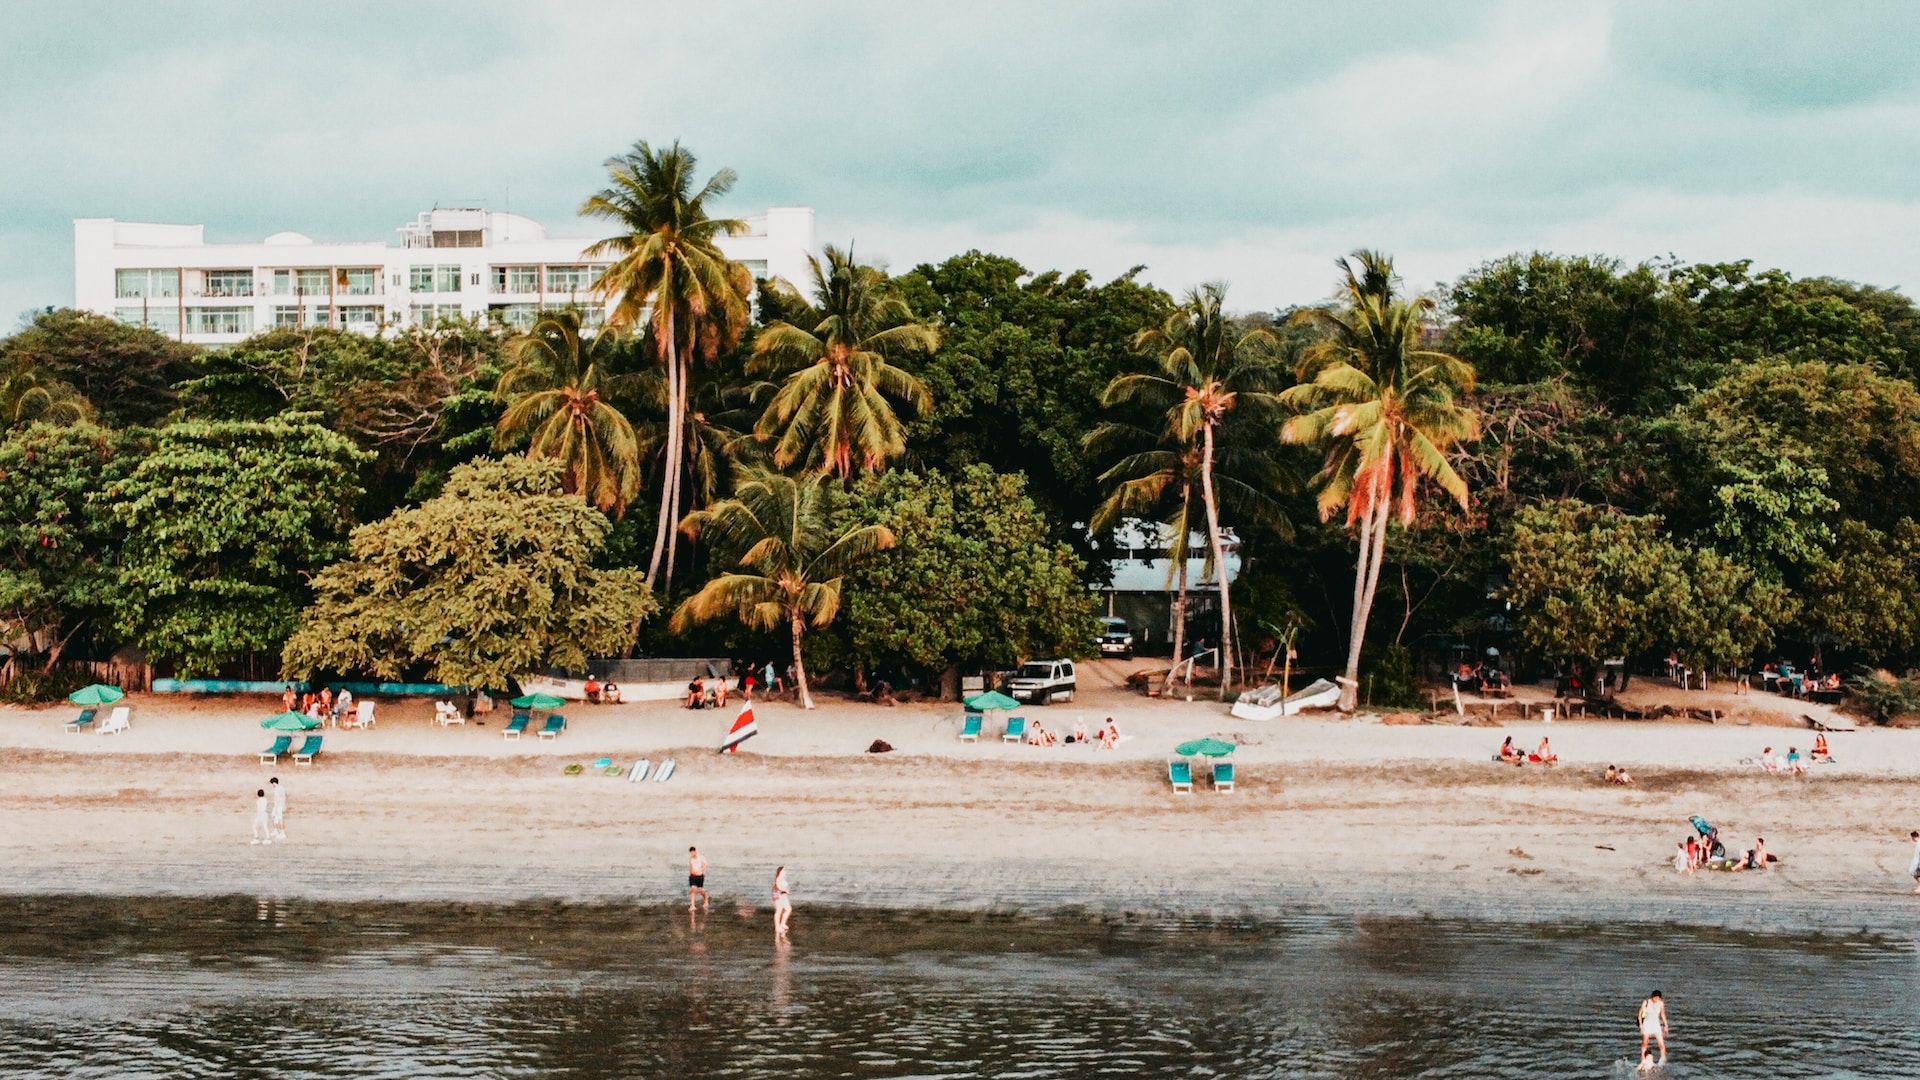 Costa Rica Coastline with Jungle Resorts Tucked Into The Trees